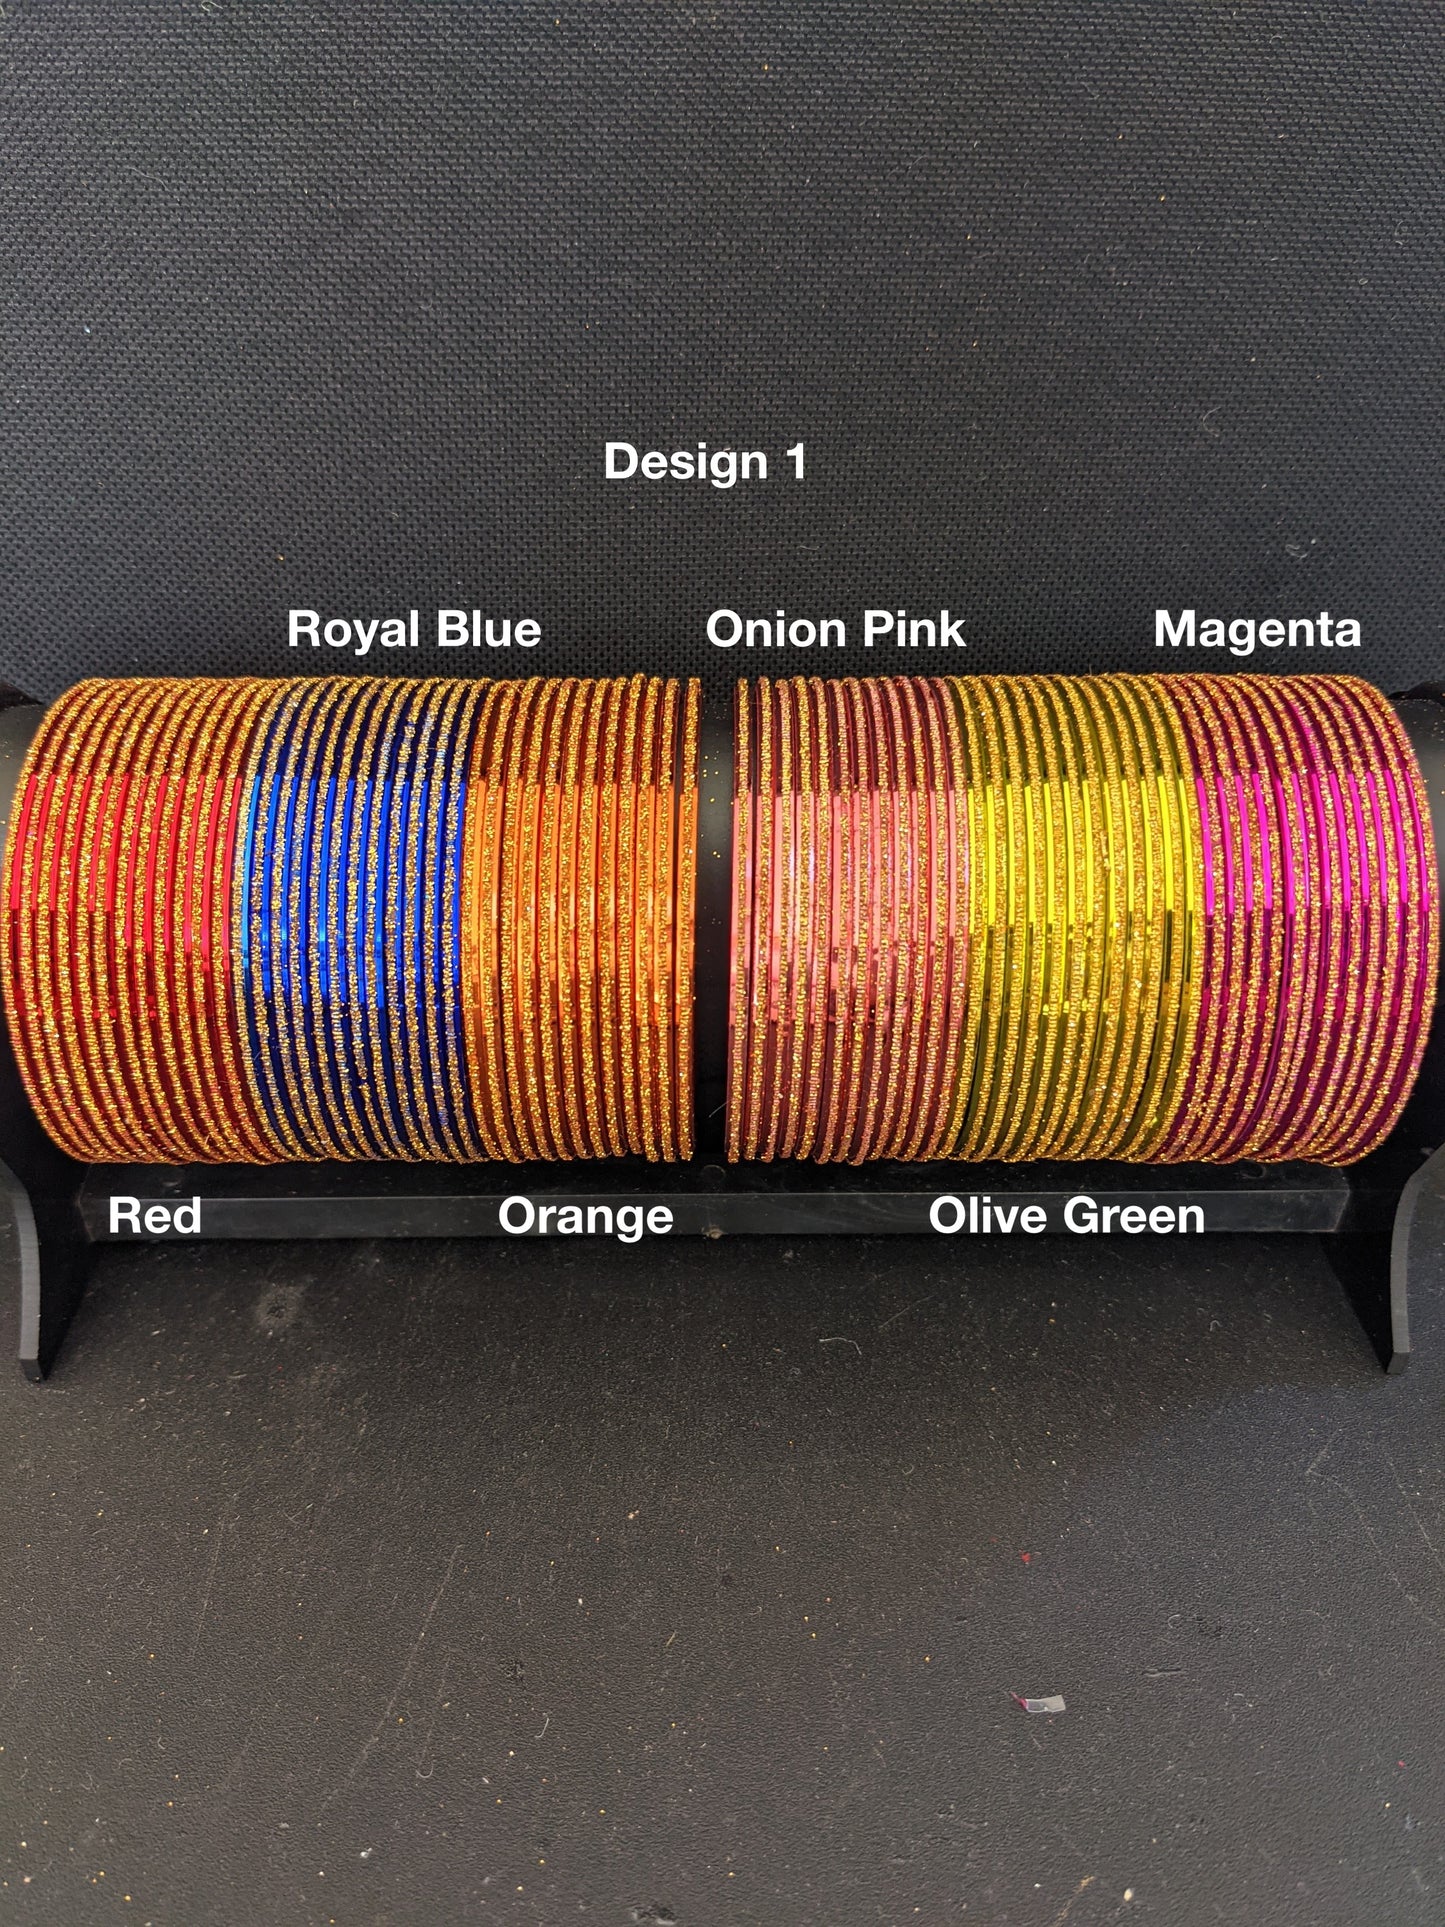 Design 1 / Big size bangles  / Colorful Thin Metal Bangles - 1 dozen - 2x10 2x12